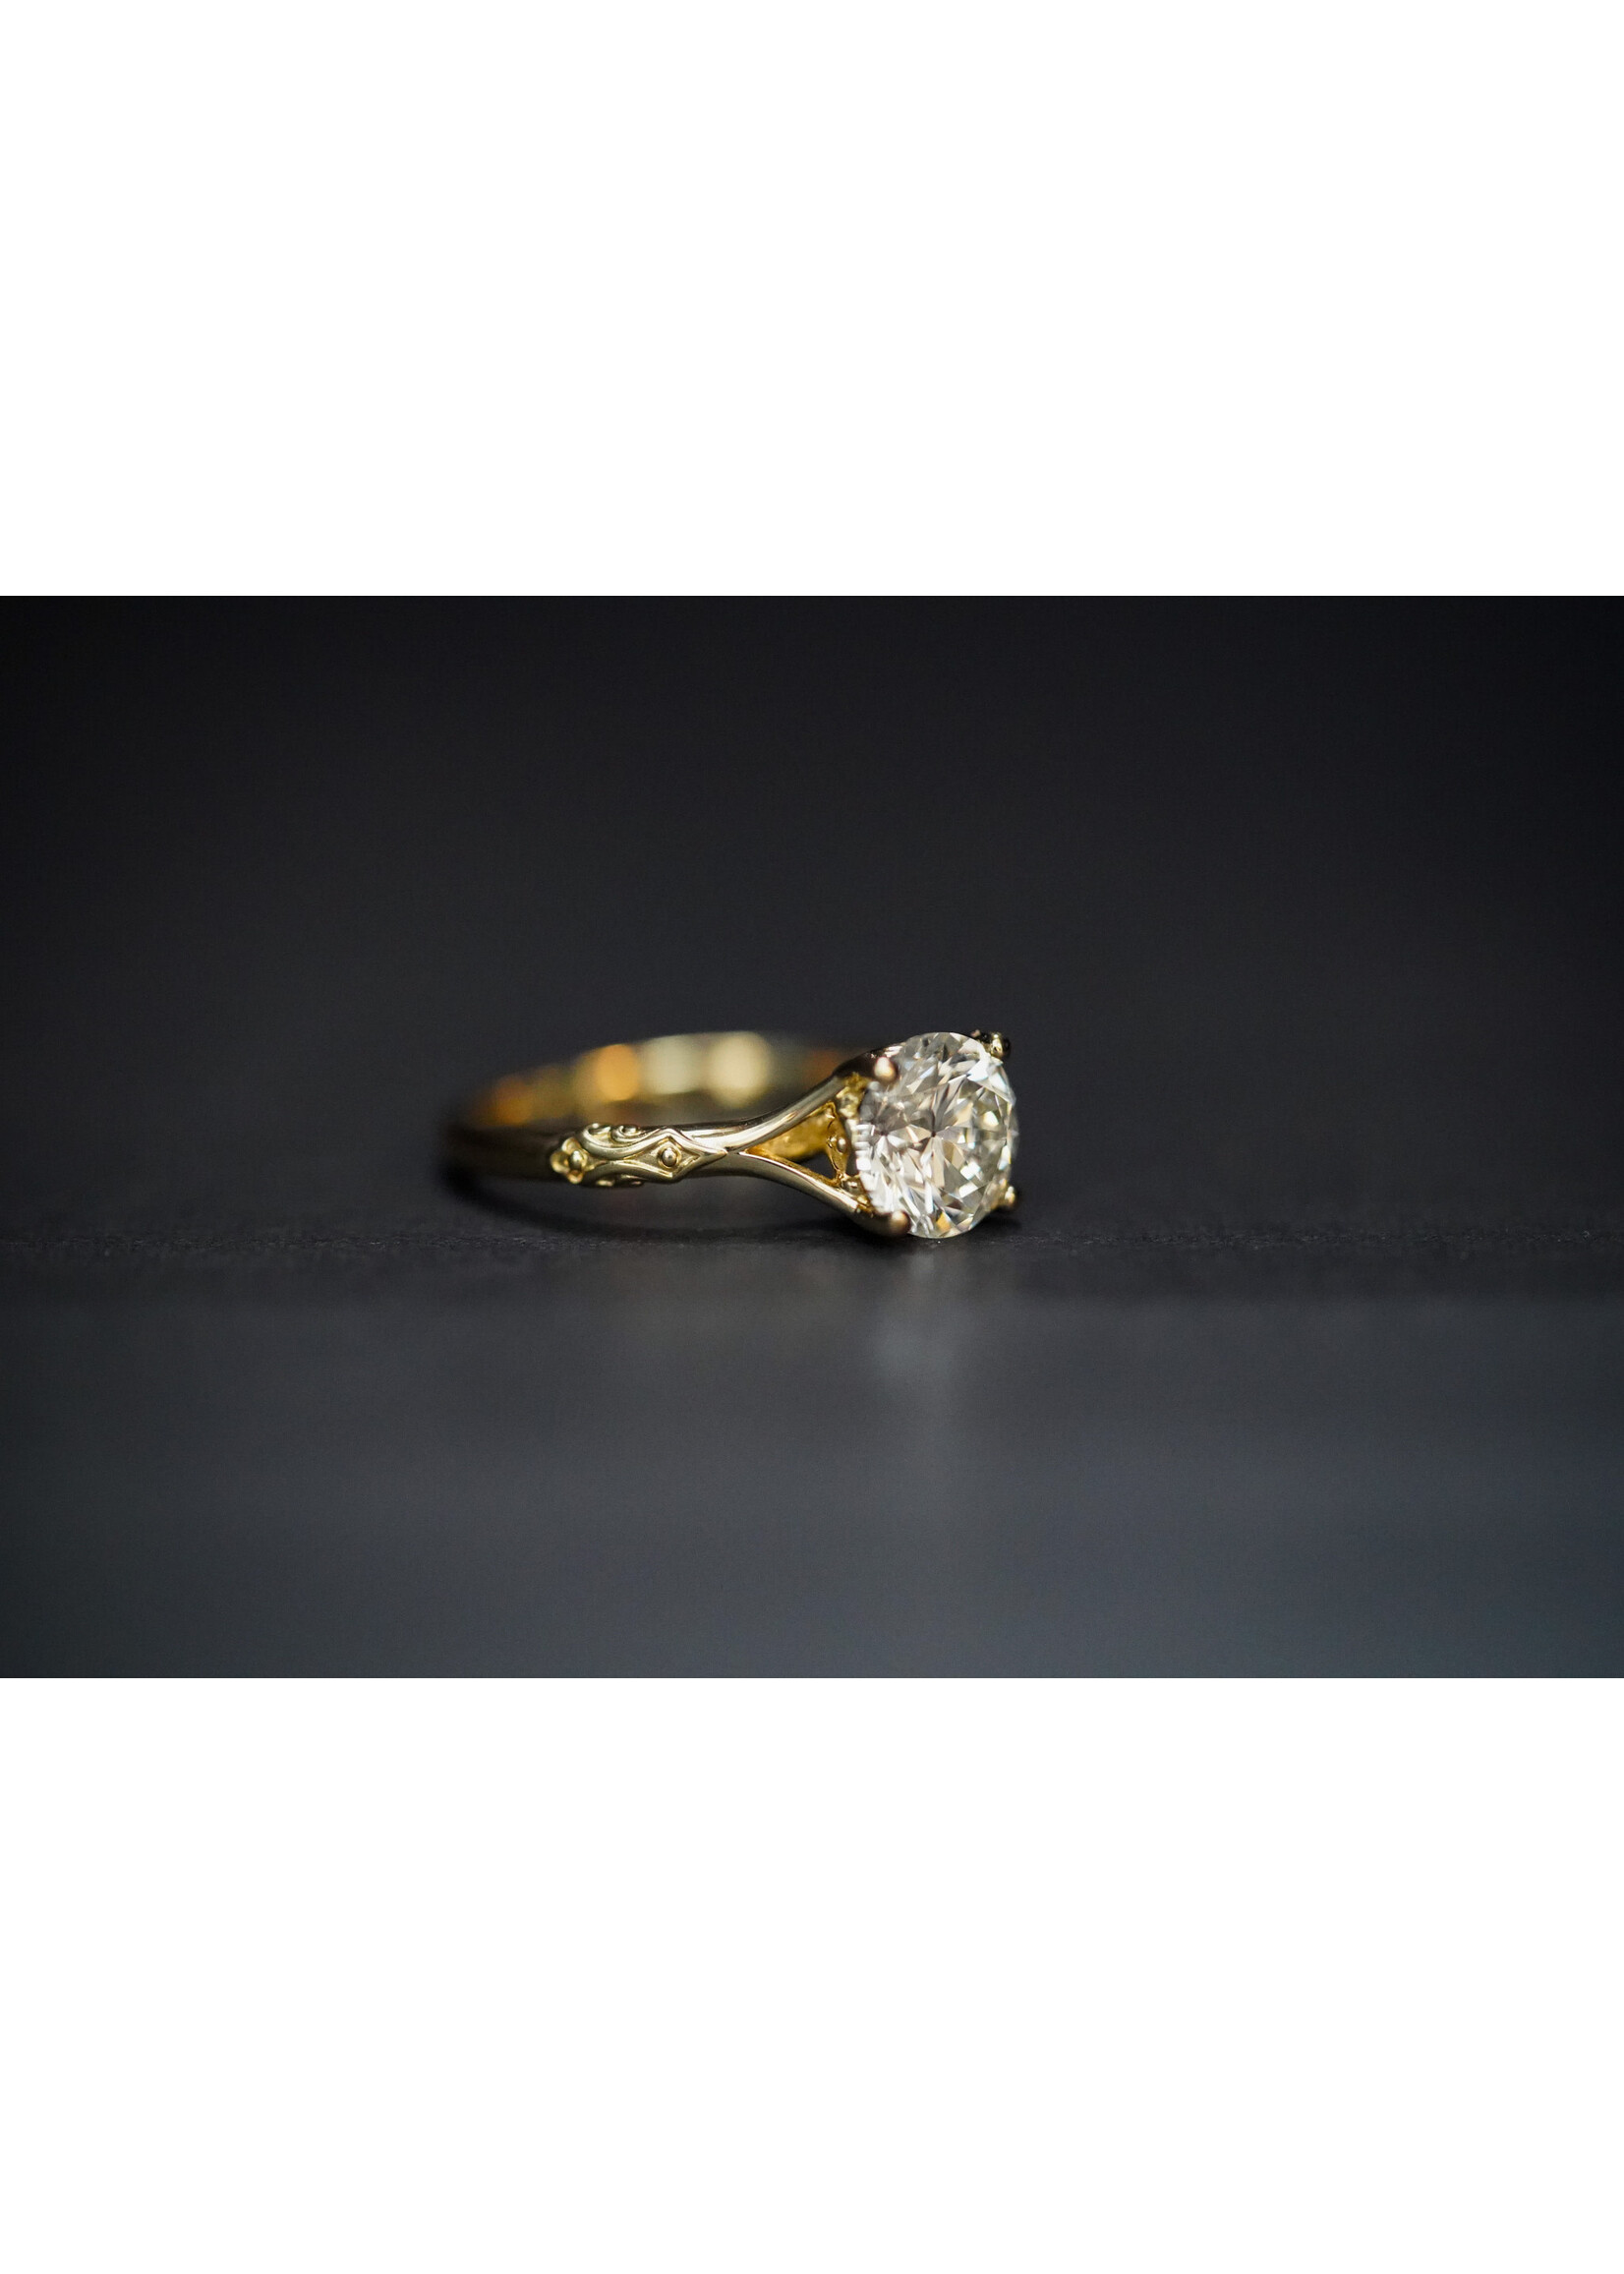 14KY 3.63g 2.02ct J/VS2 European Diamond Vintage Style Solitaire Engagement Ring (size 7.5)